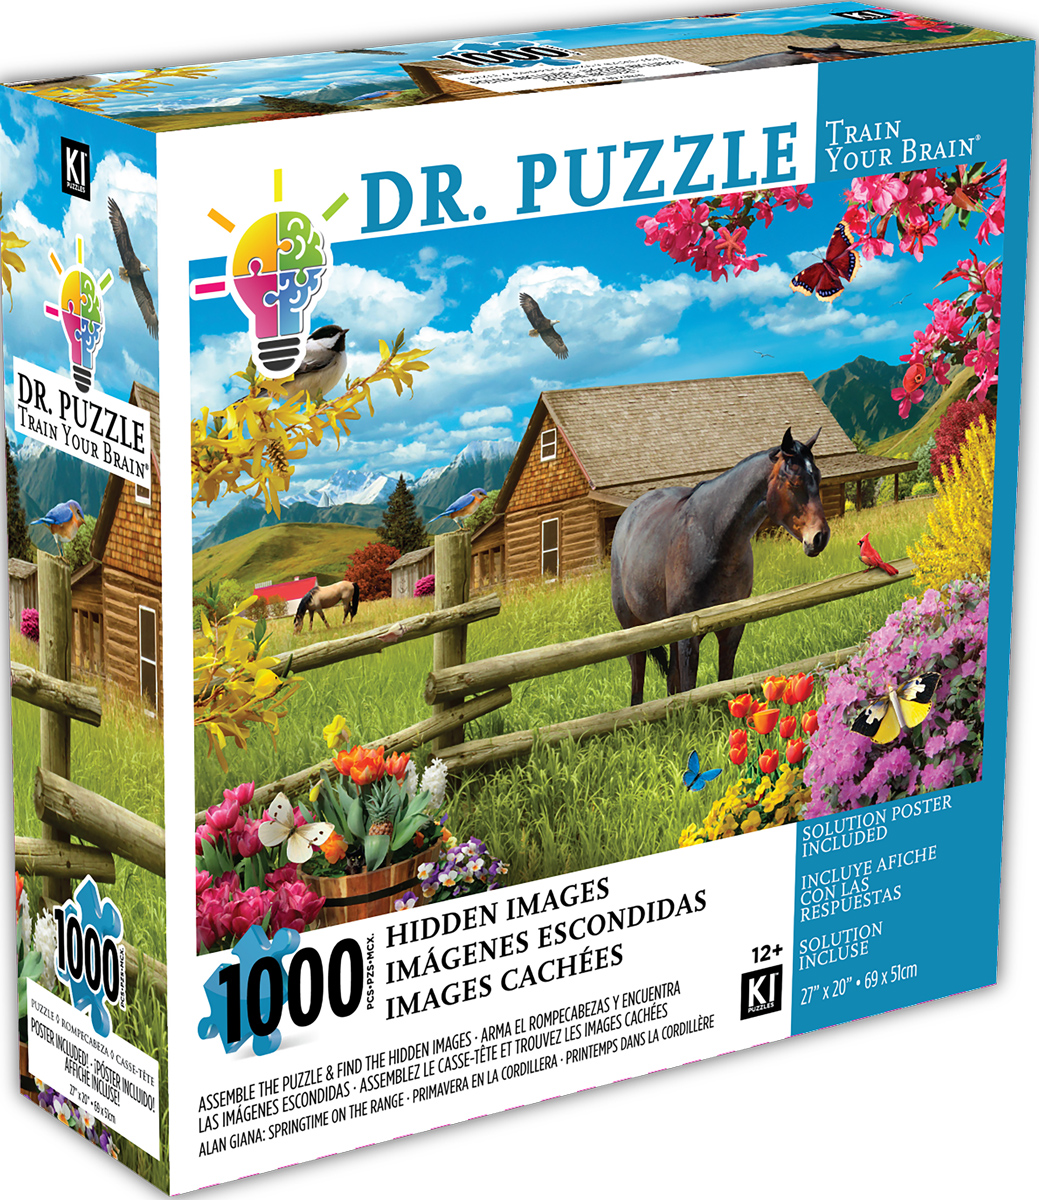 Dr. Puzzle "Springtime on the Range"